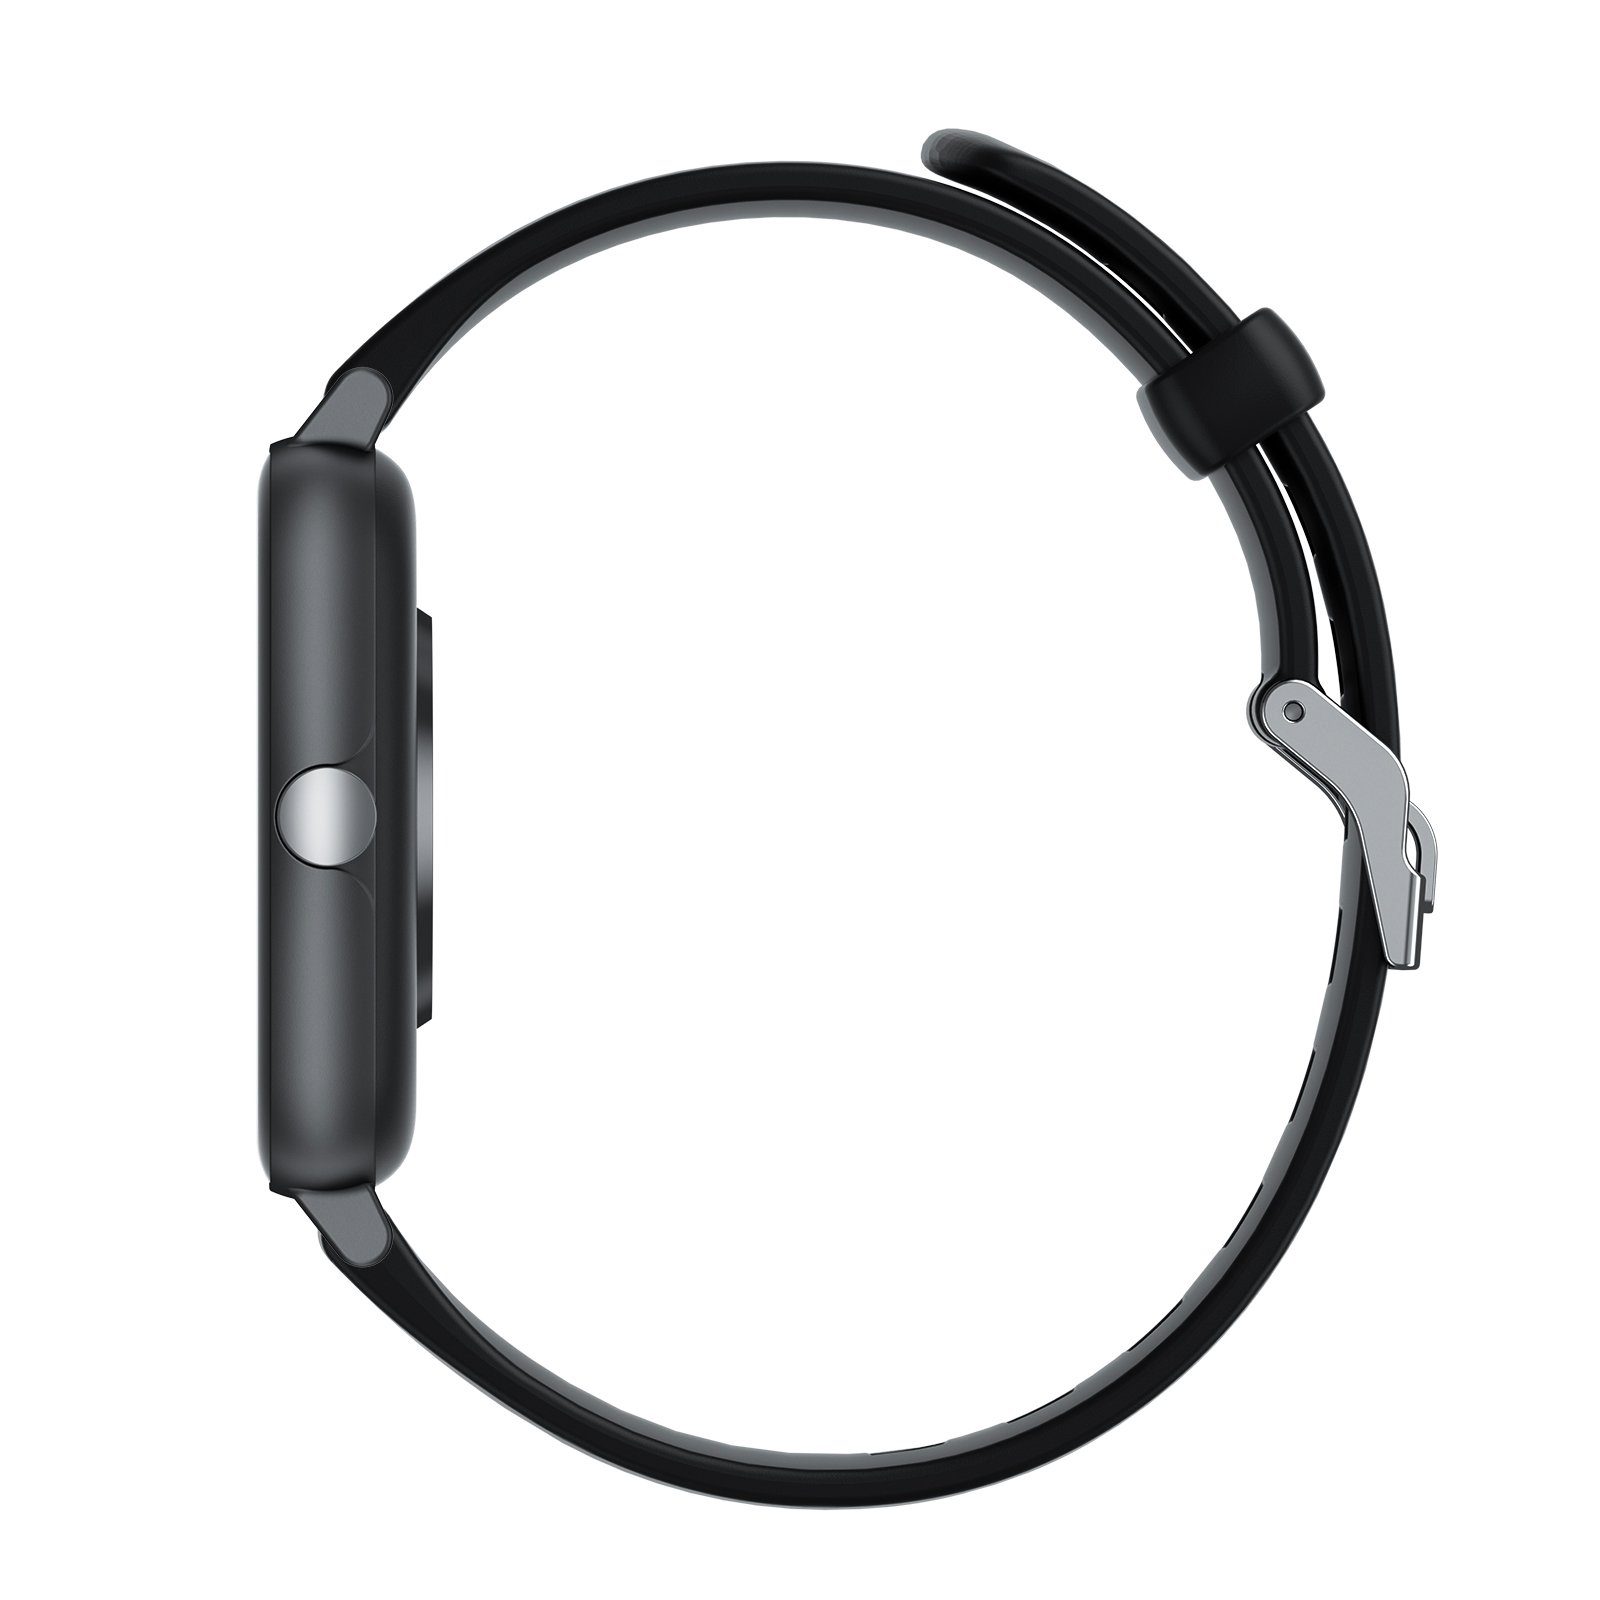 FELIXLEO Smartwatch-Armband Fitness 1.7" Uhr Uhr Tracker Touchscreen,IP68 Fitness GTS2 Smartwatch